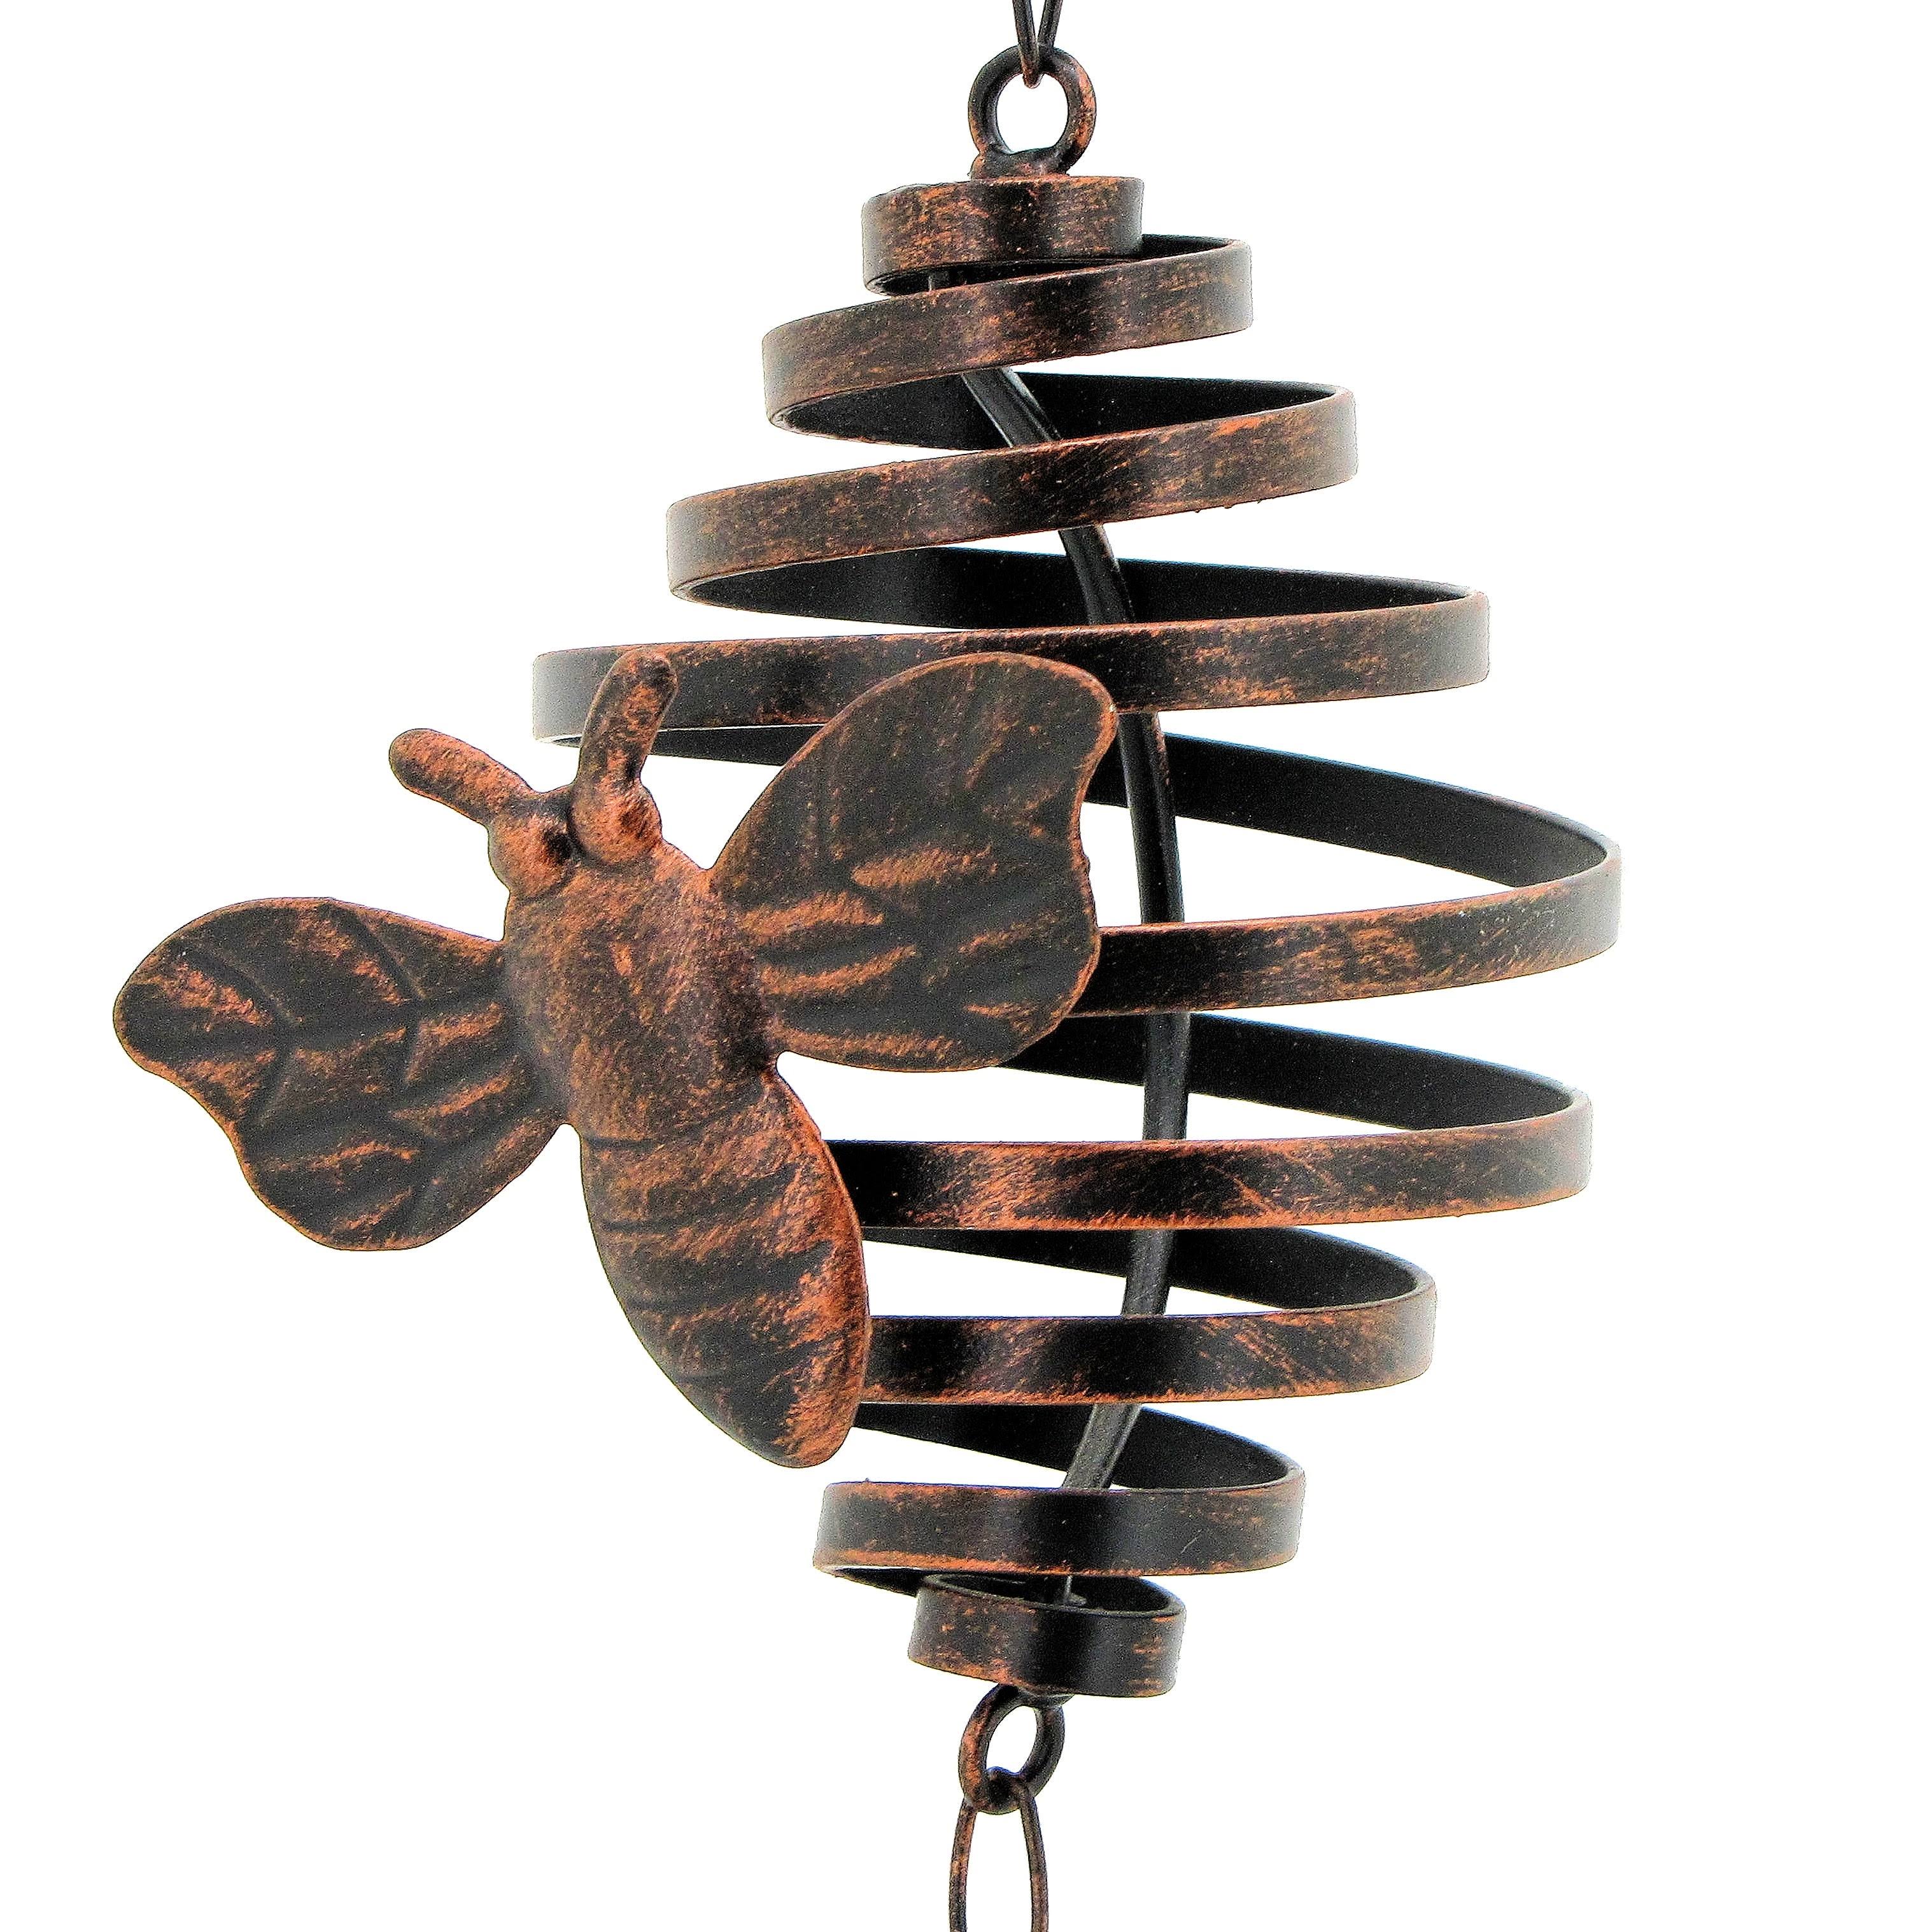 Zaer LTD 79" Long Antique Bronze Hanging Honeybee Rain Chain